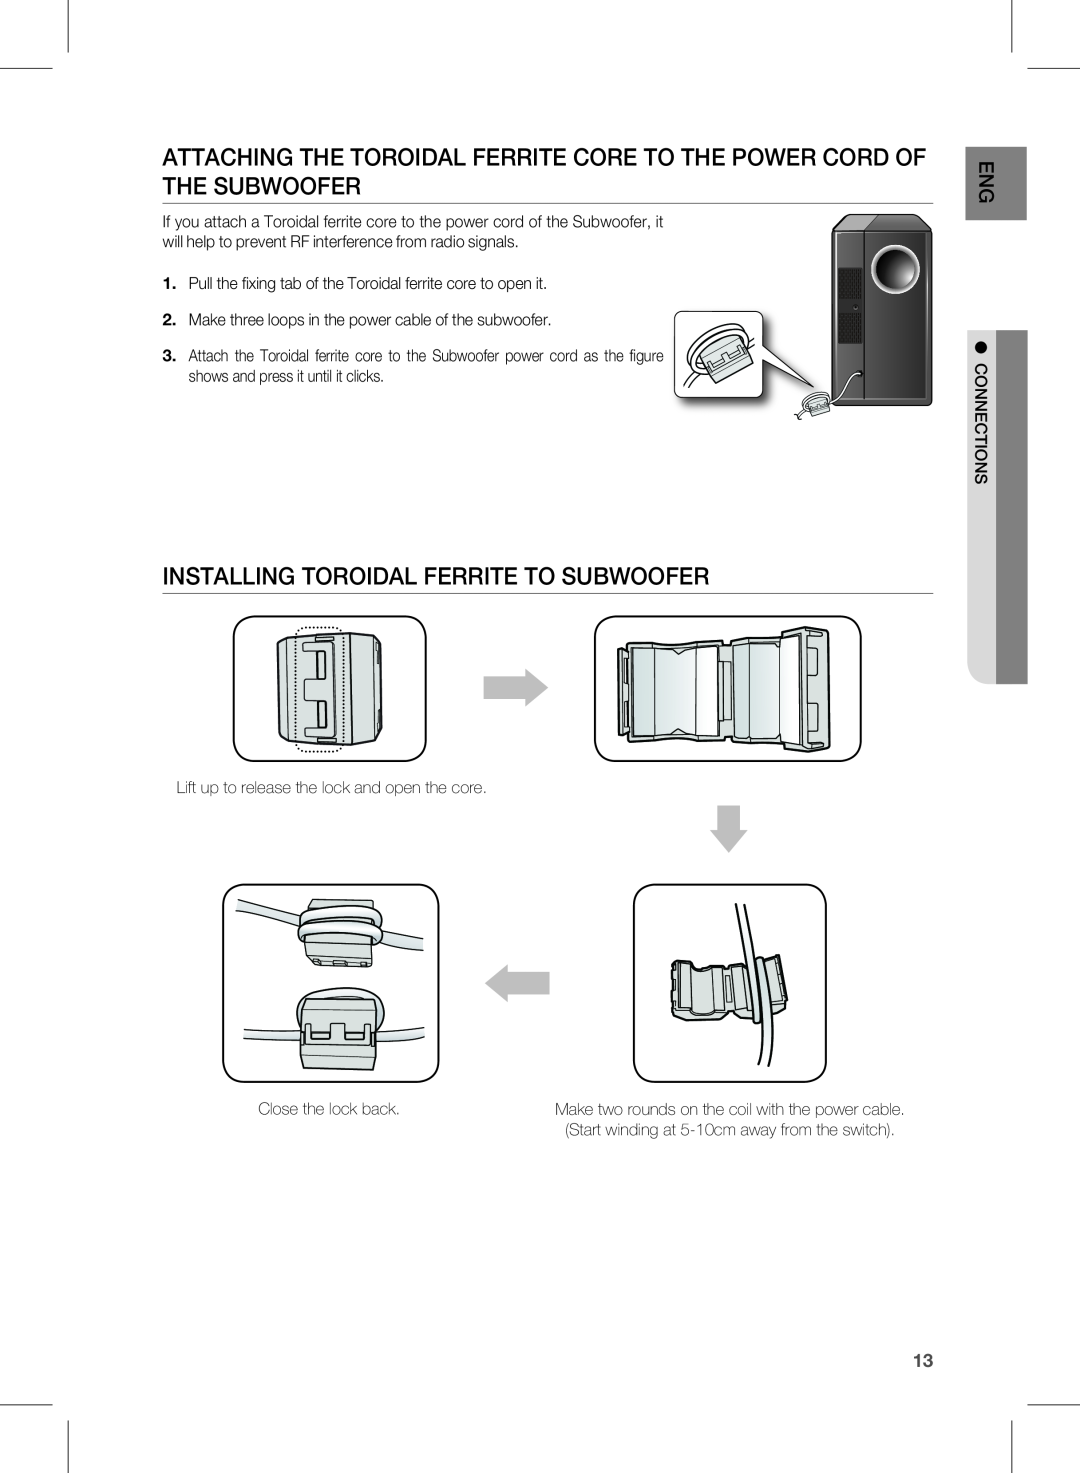 Samsung HW-D550, HW-D551 user manual InSTaLLInG TOROIDaL FERRITE TO SubWOOFER 